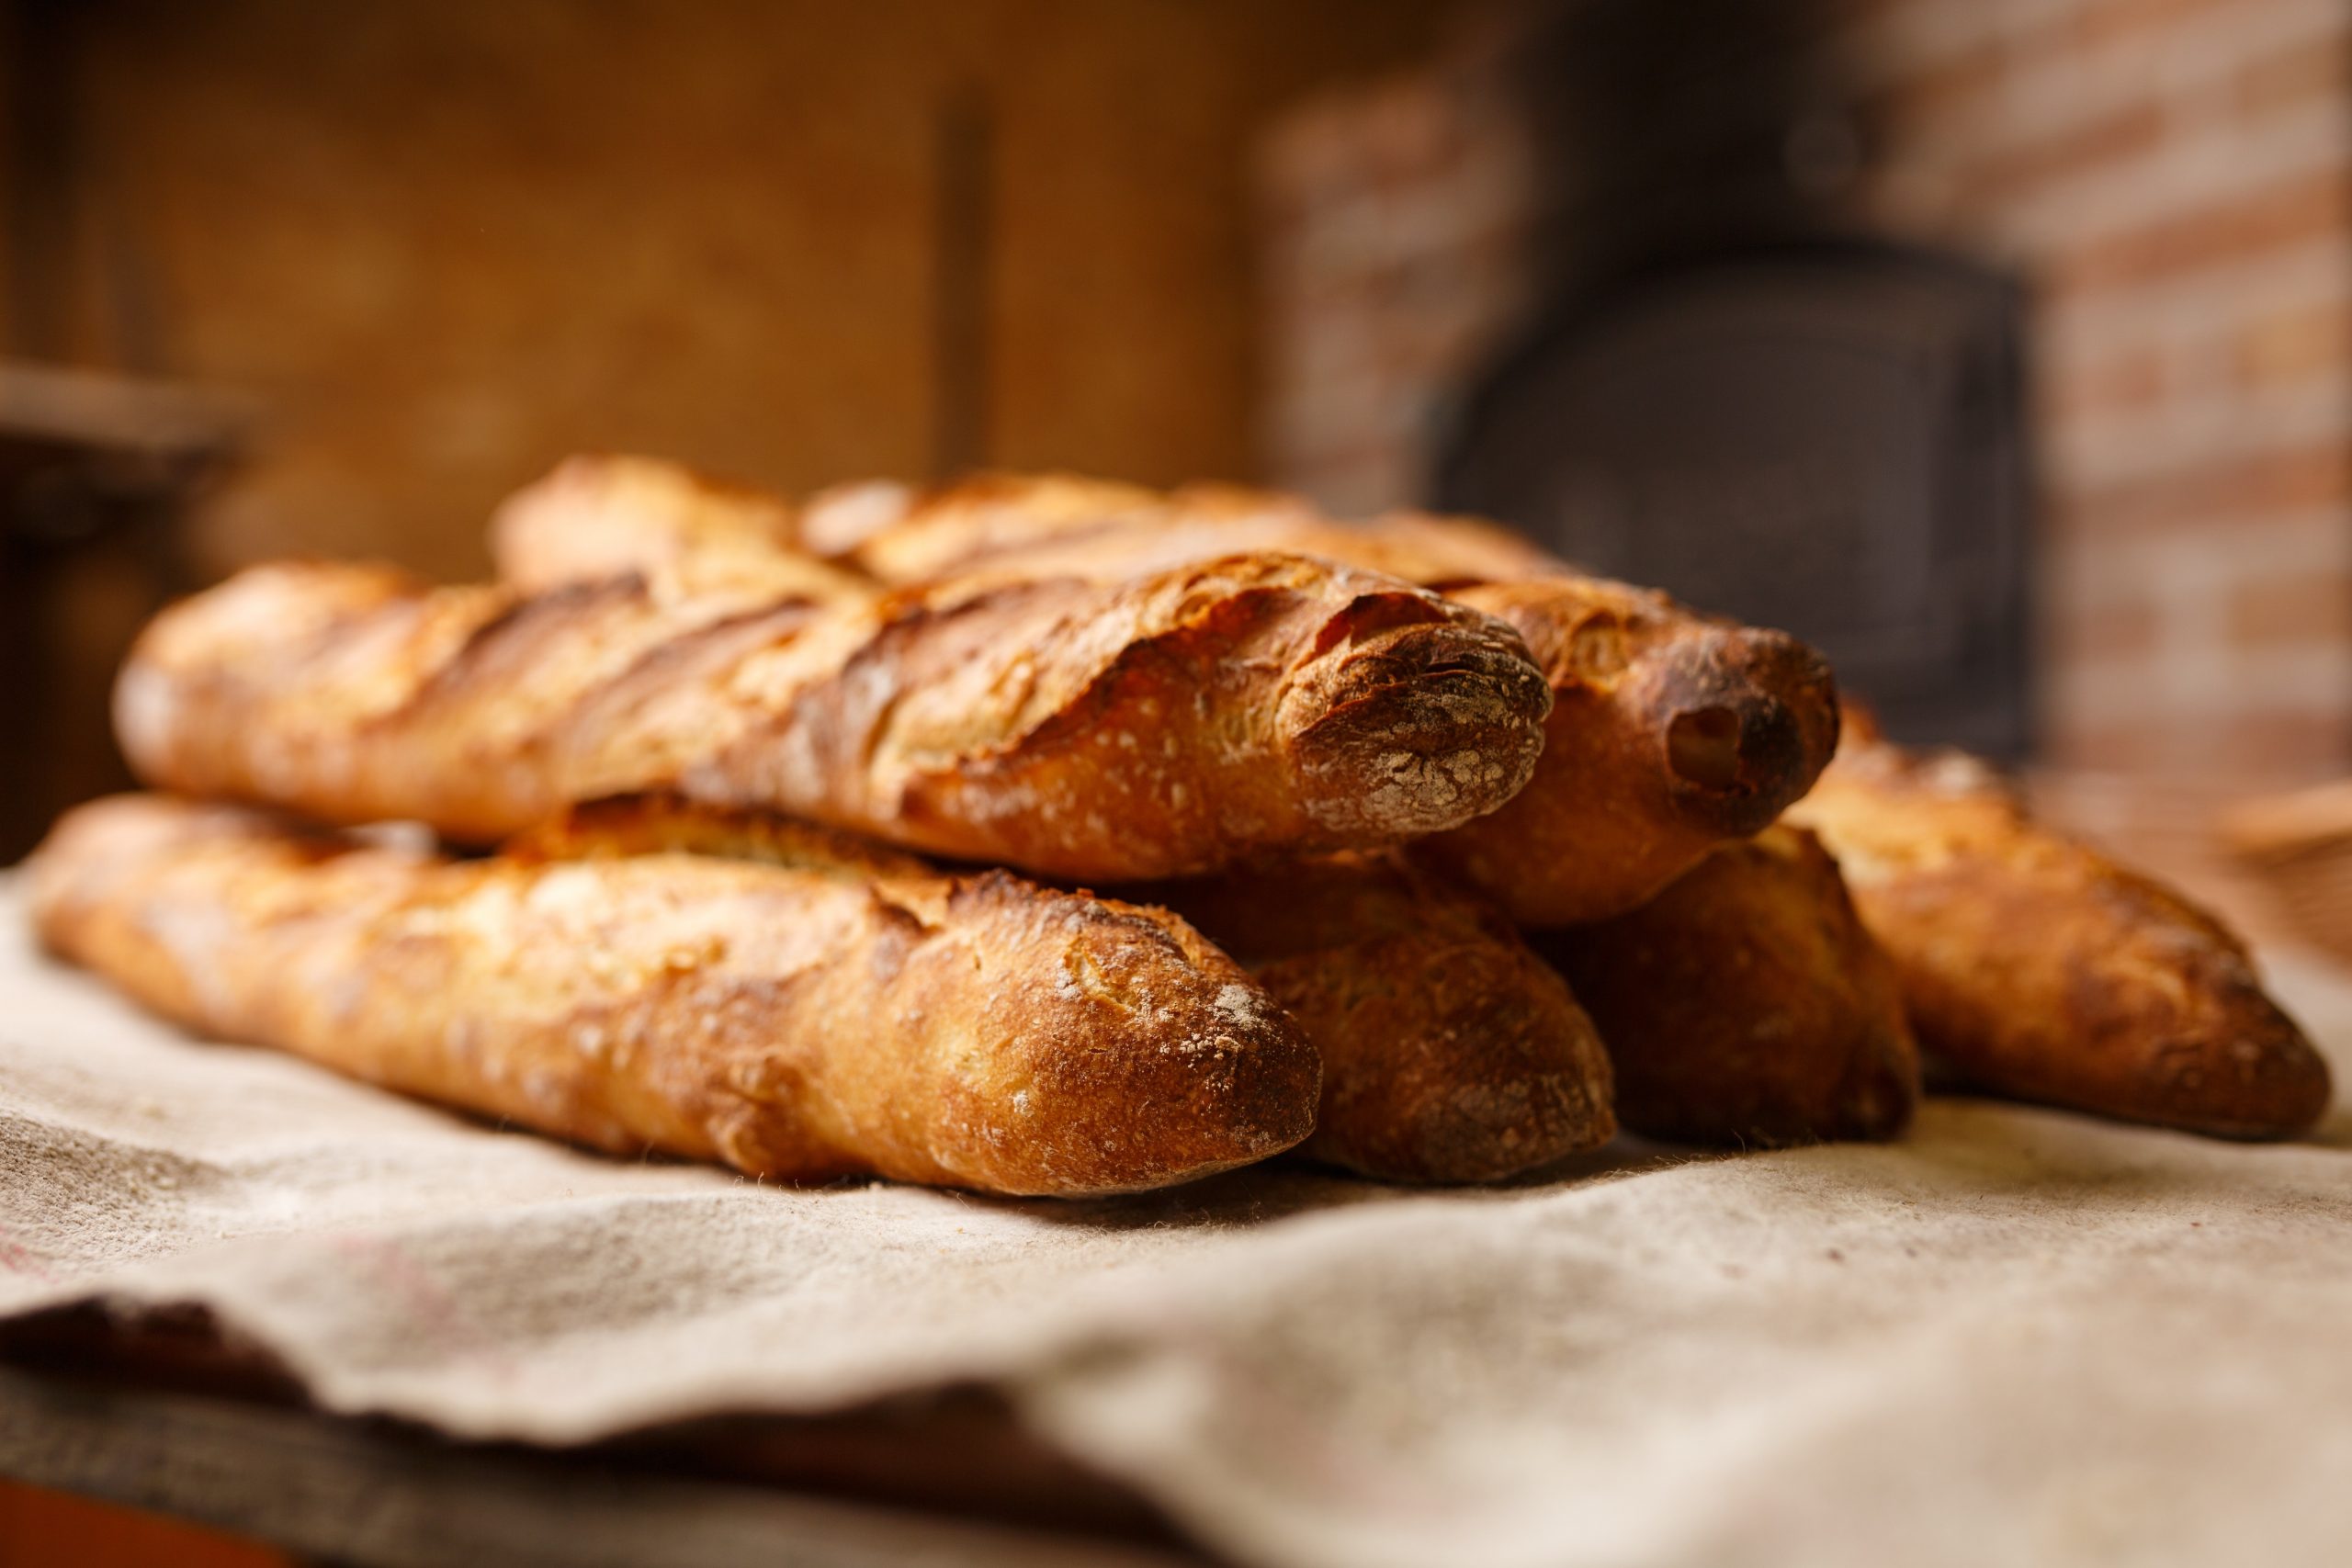 Thumbnail for Respectus panis, “nuova” tecnica francese per fare il pane